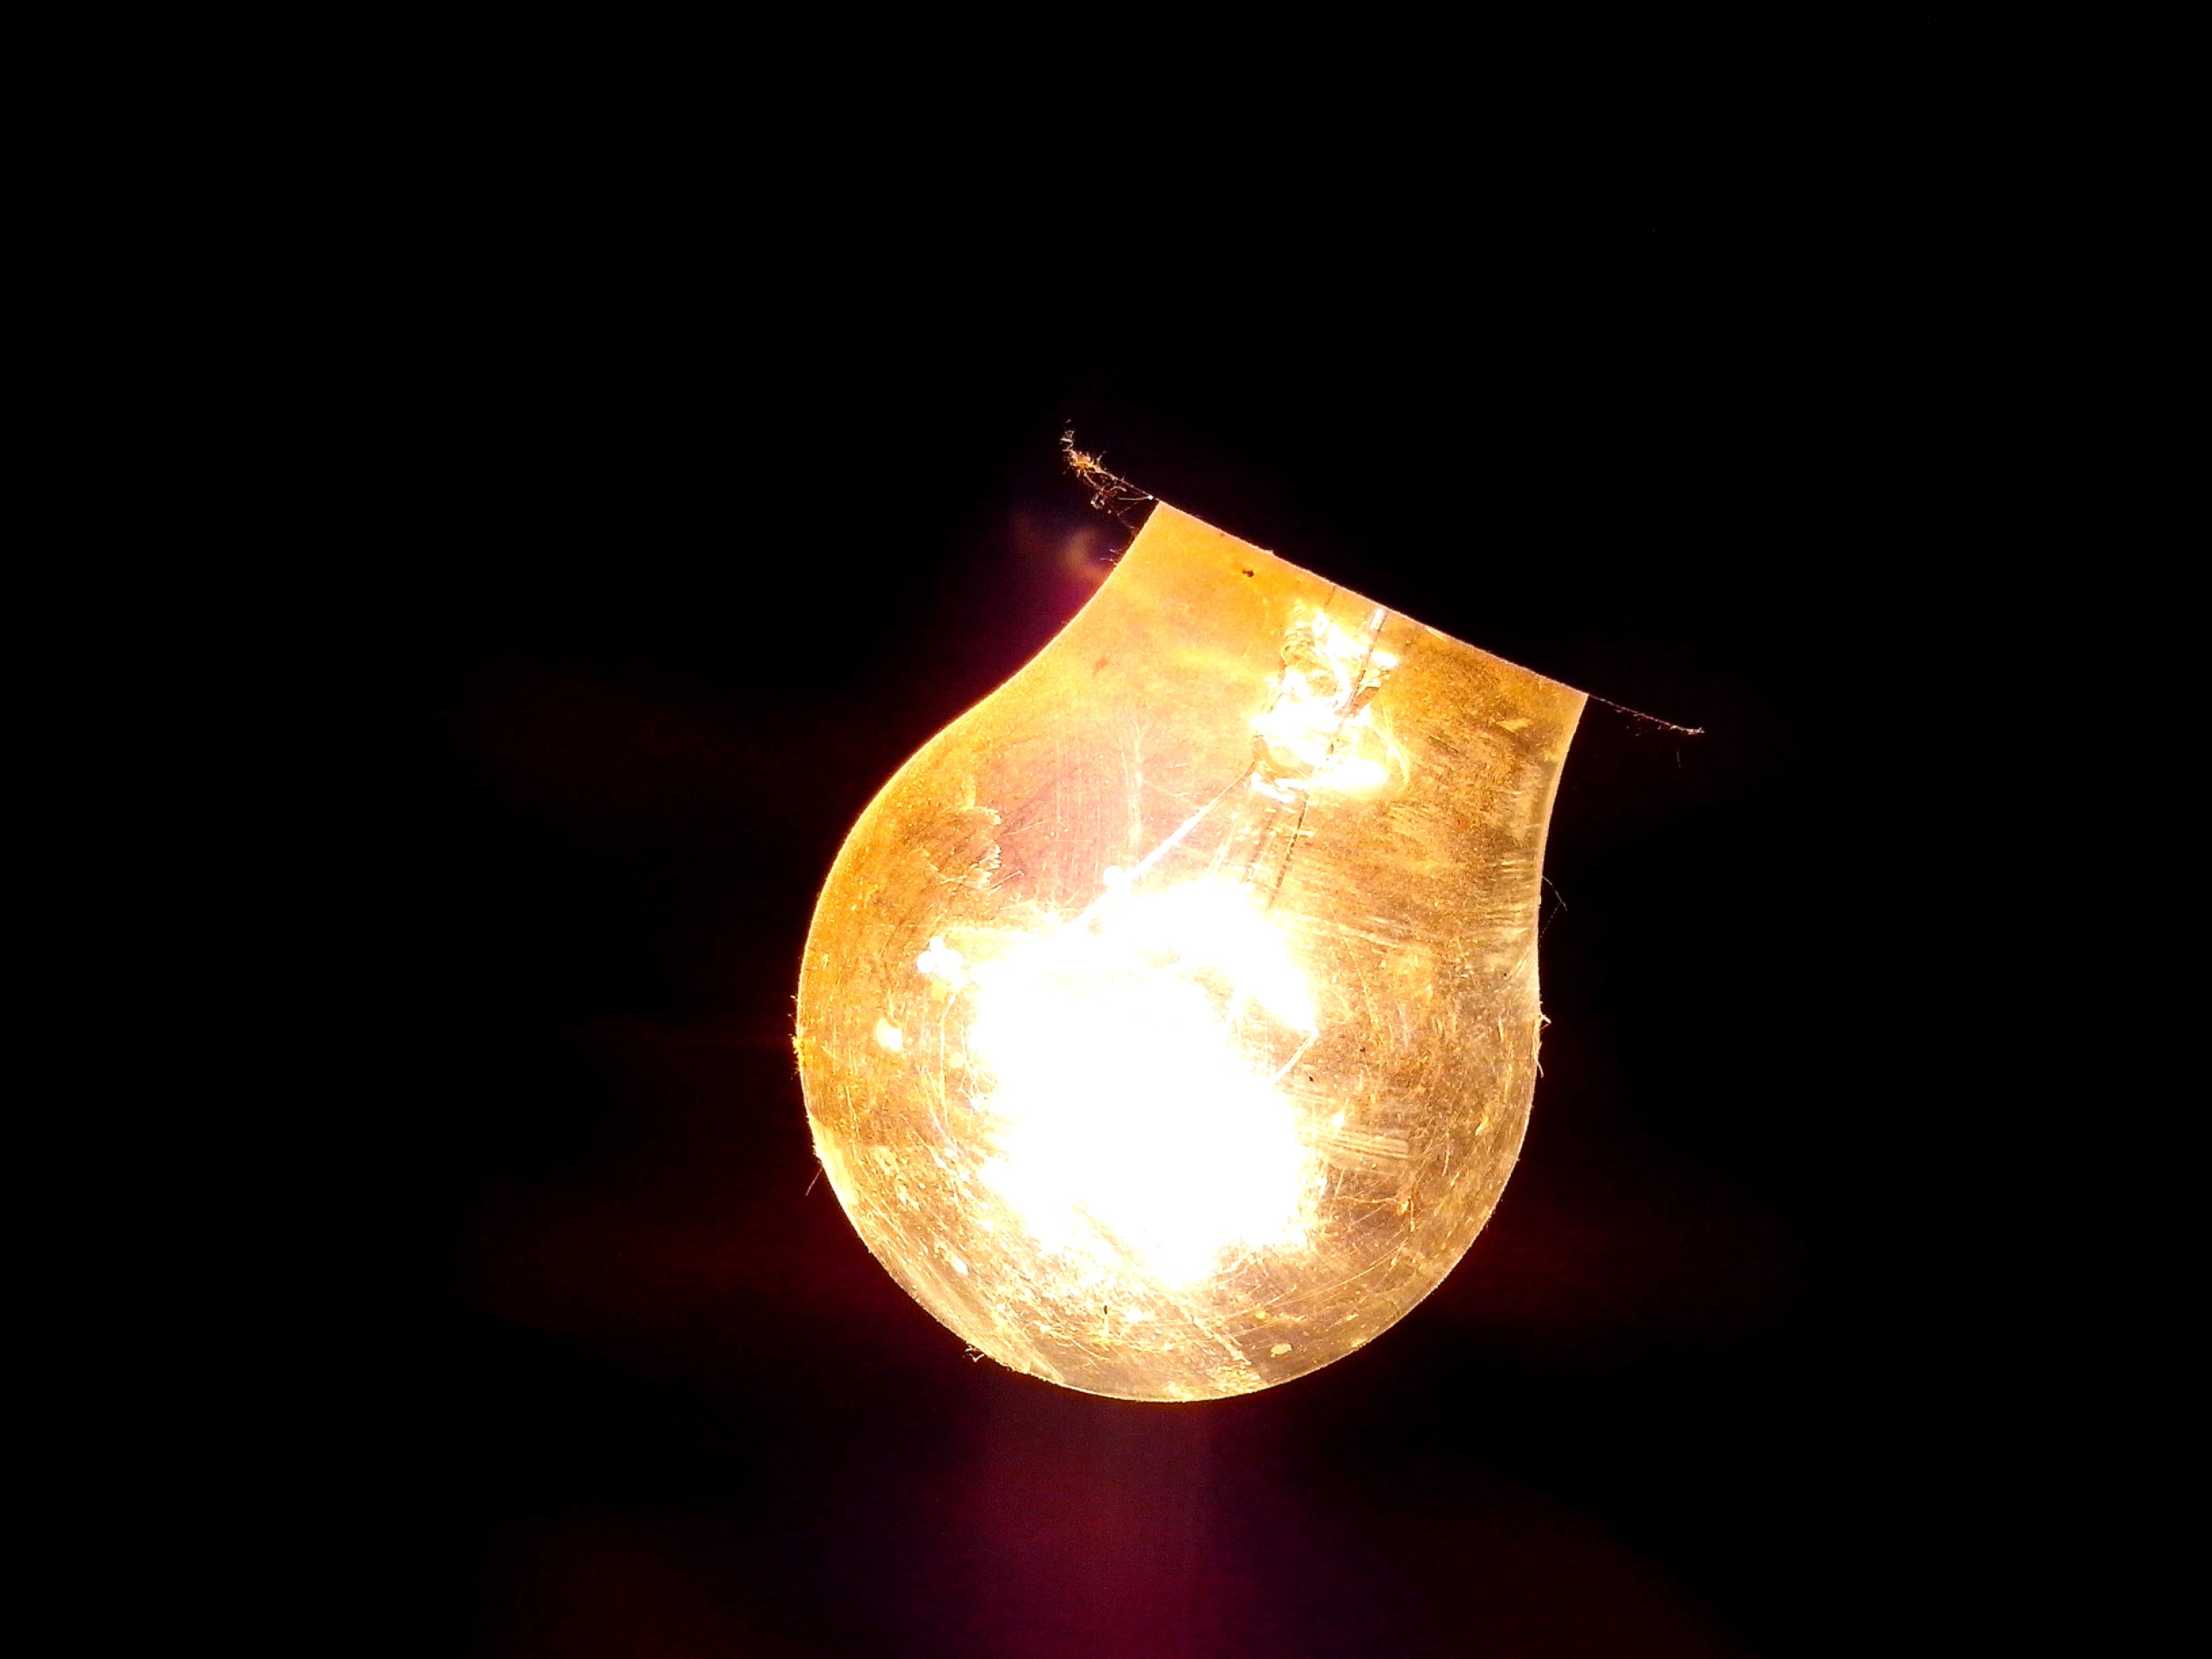 Light bulb in darkness